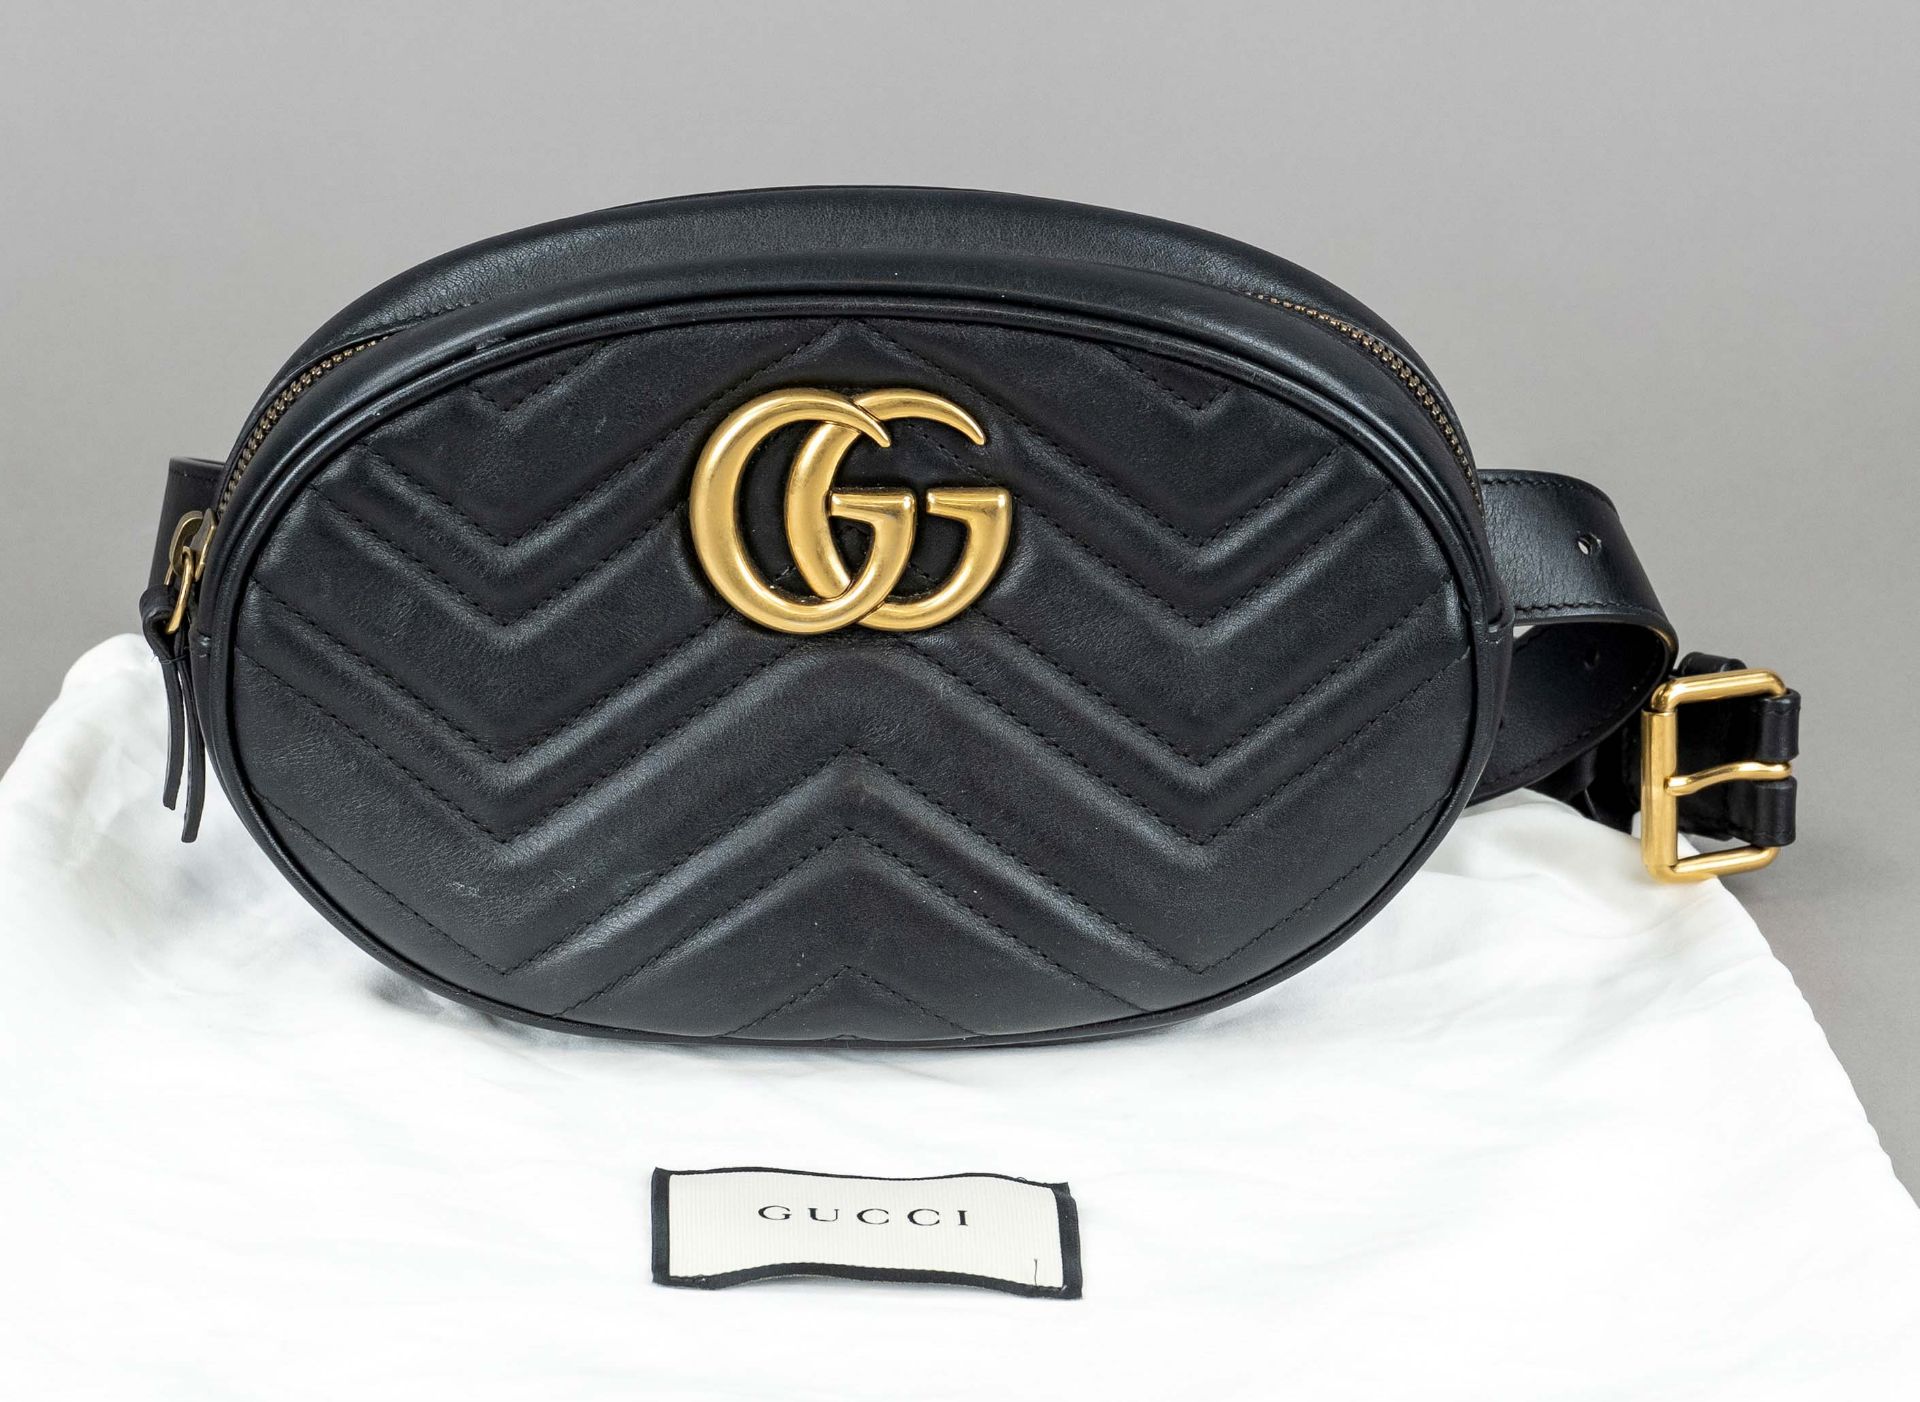 Gucci, Black Matelasse Leather GG Marmont Belt Bag, black quilted calfskin, gold-tone hardware,